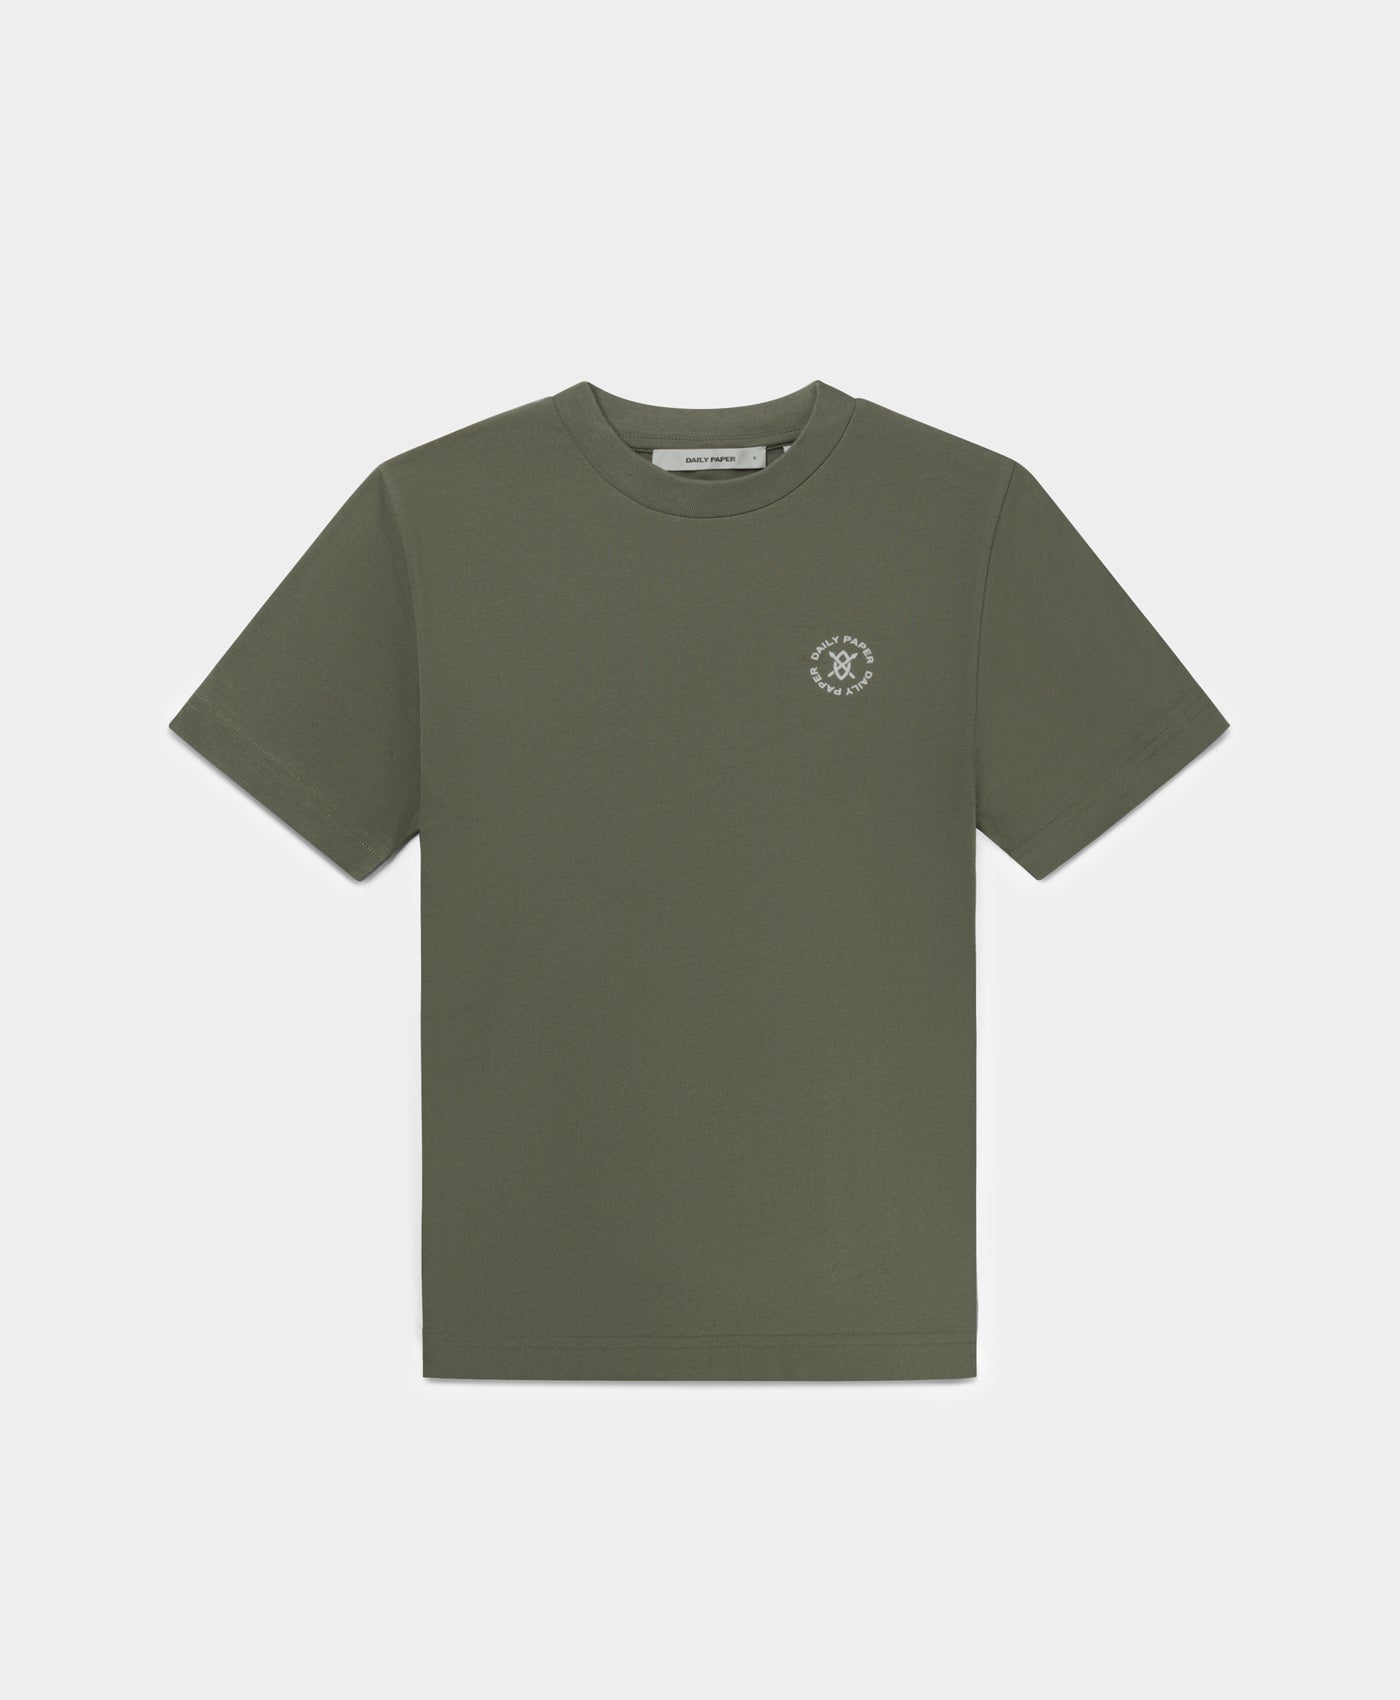 DP - Chimera Green Circle T-Shirt - Packshot - Front